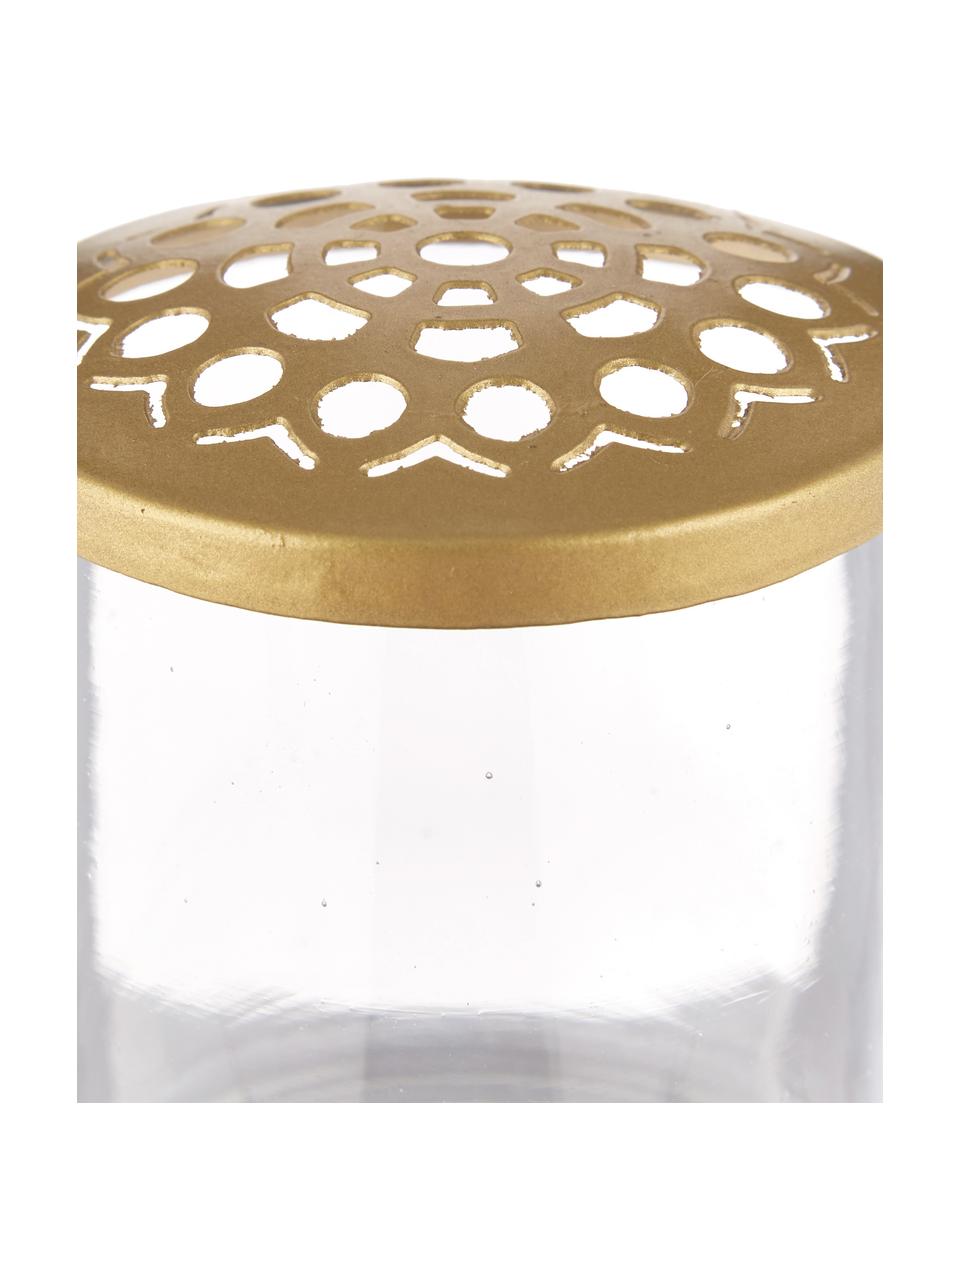 Kleine vazenset Kassandra met deksel, 2-delig, Vaas: glas, Deksel: roestrvrijstaal, Transparant, messingkleurig, Set met verschillende groottes